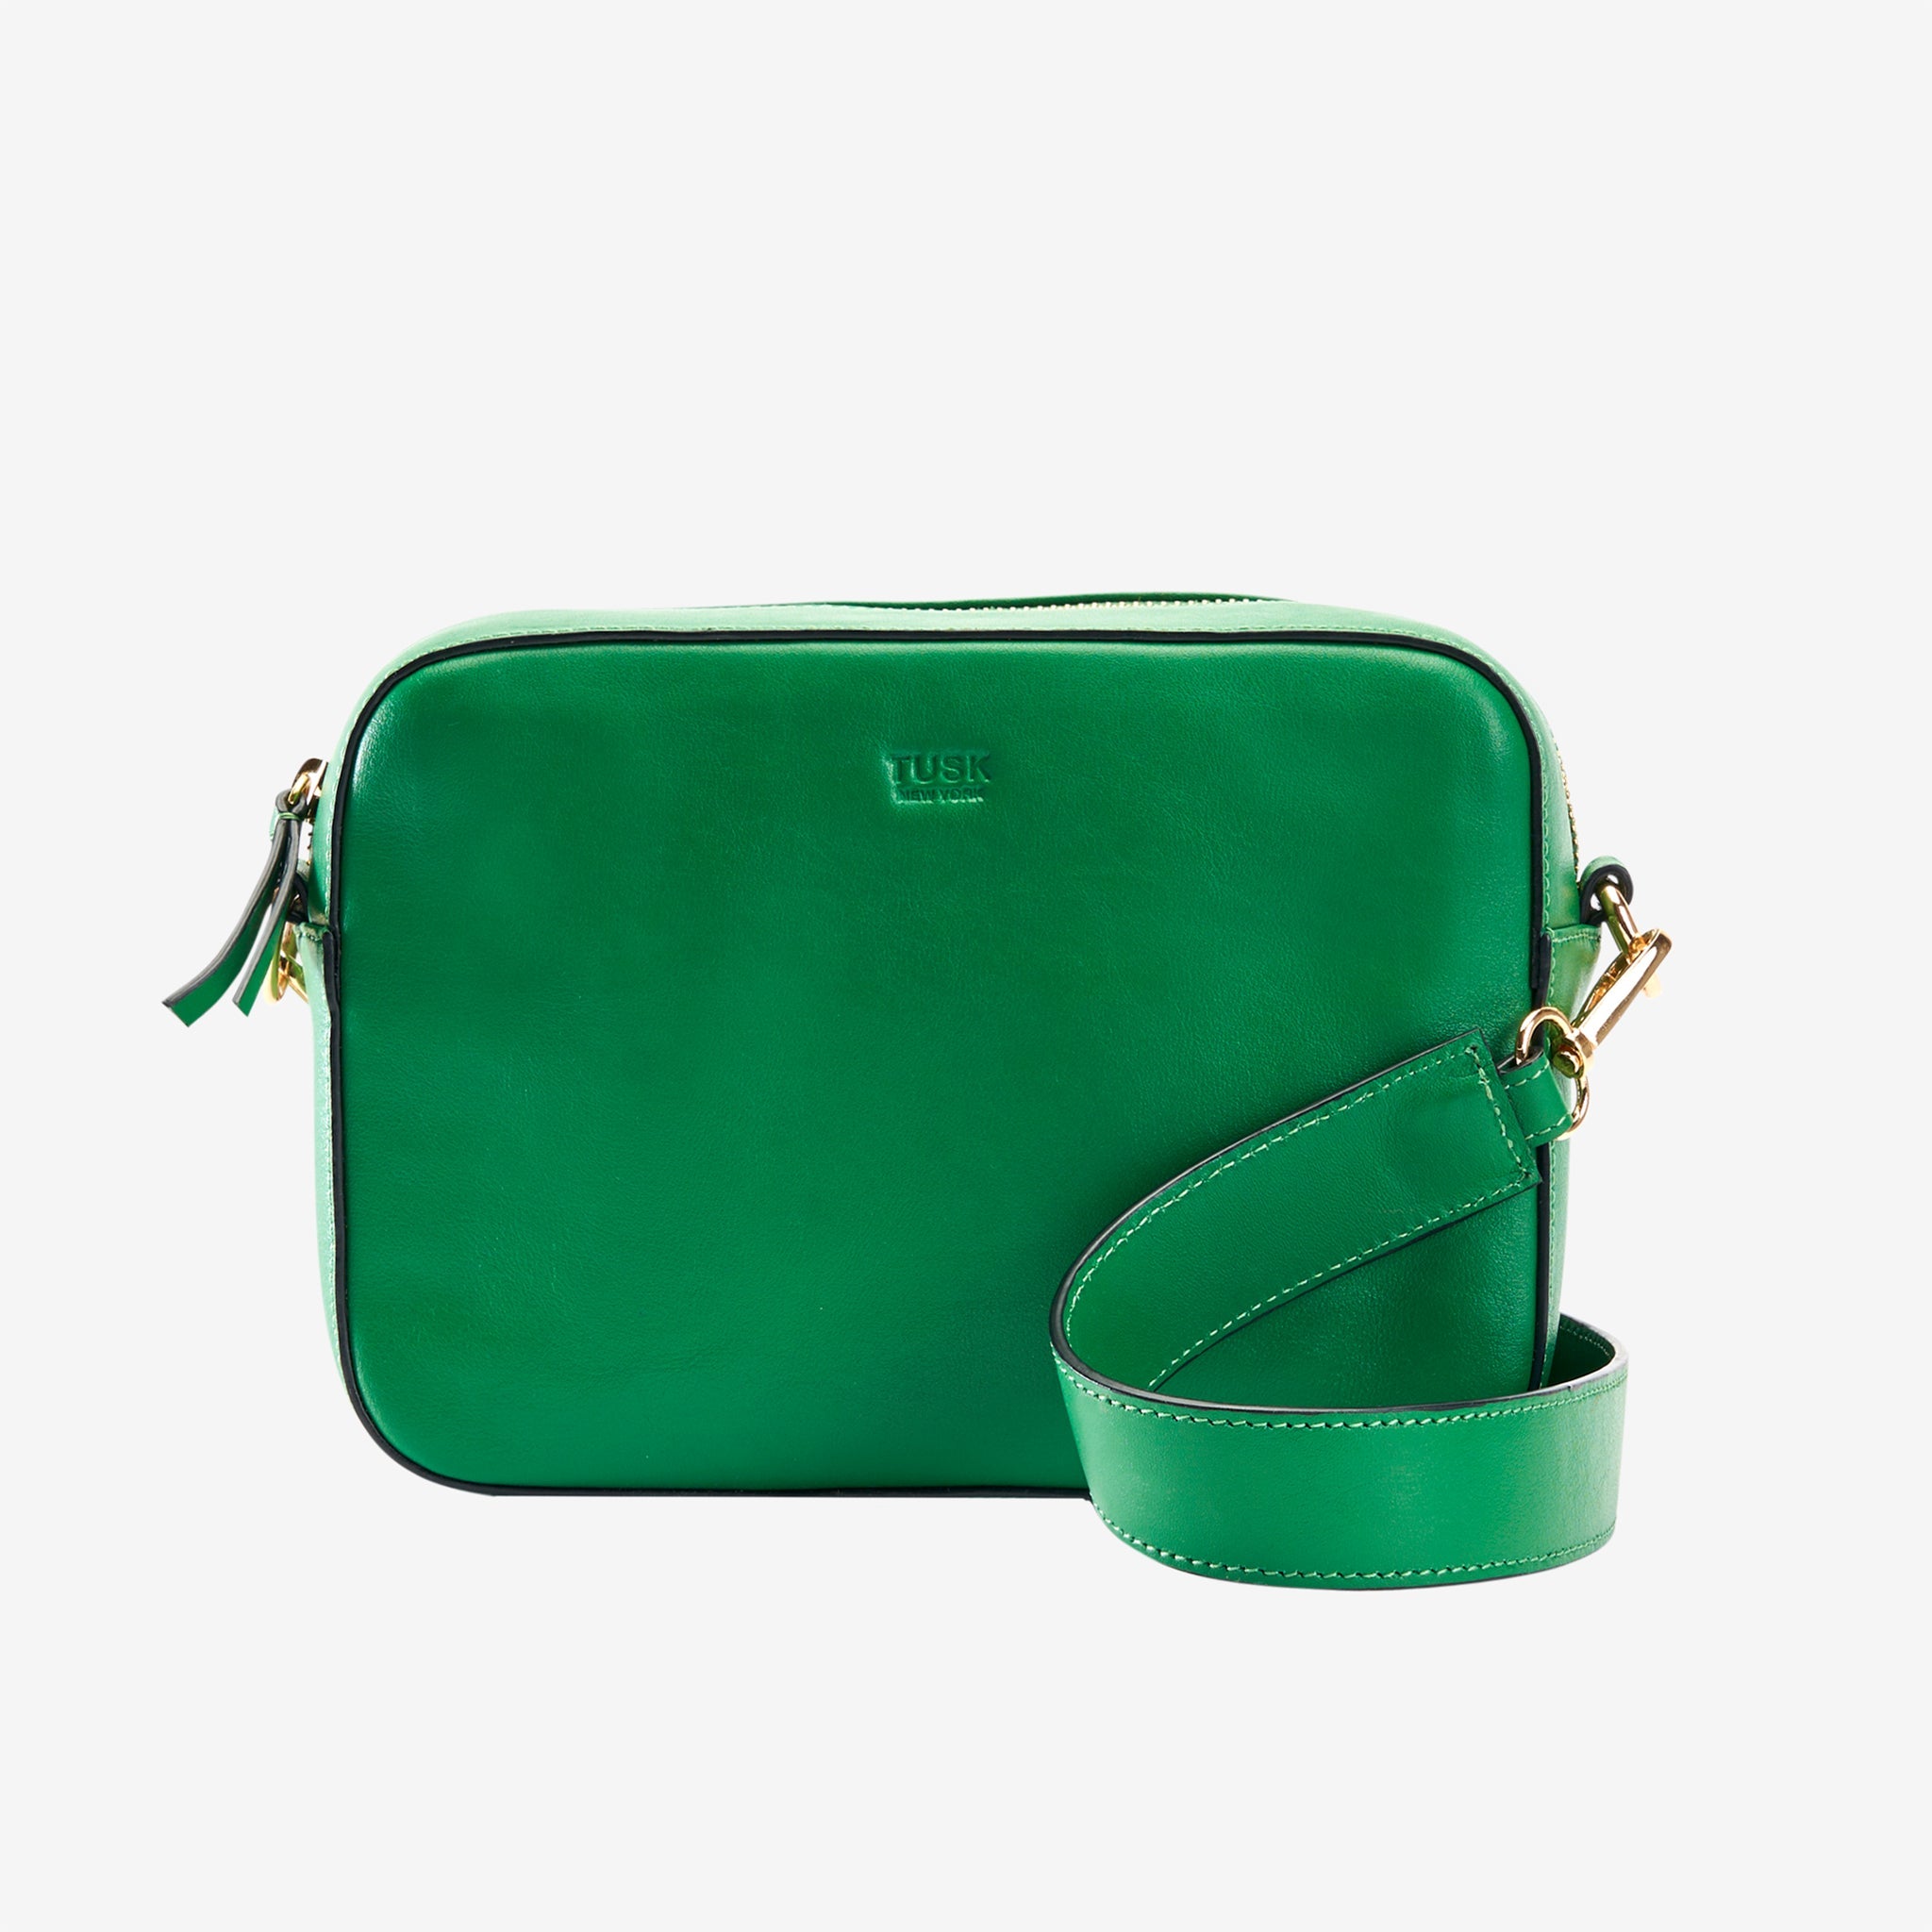 Hyer Goods Luxe Camera Bag Glazed Green